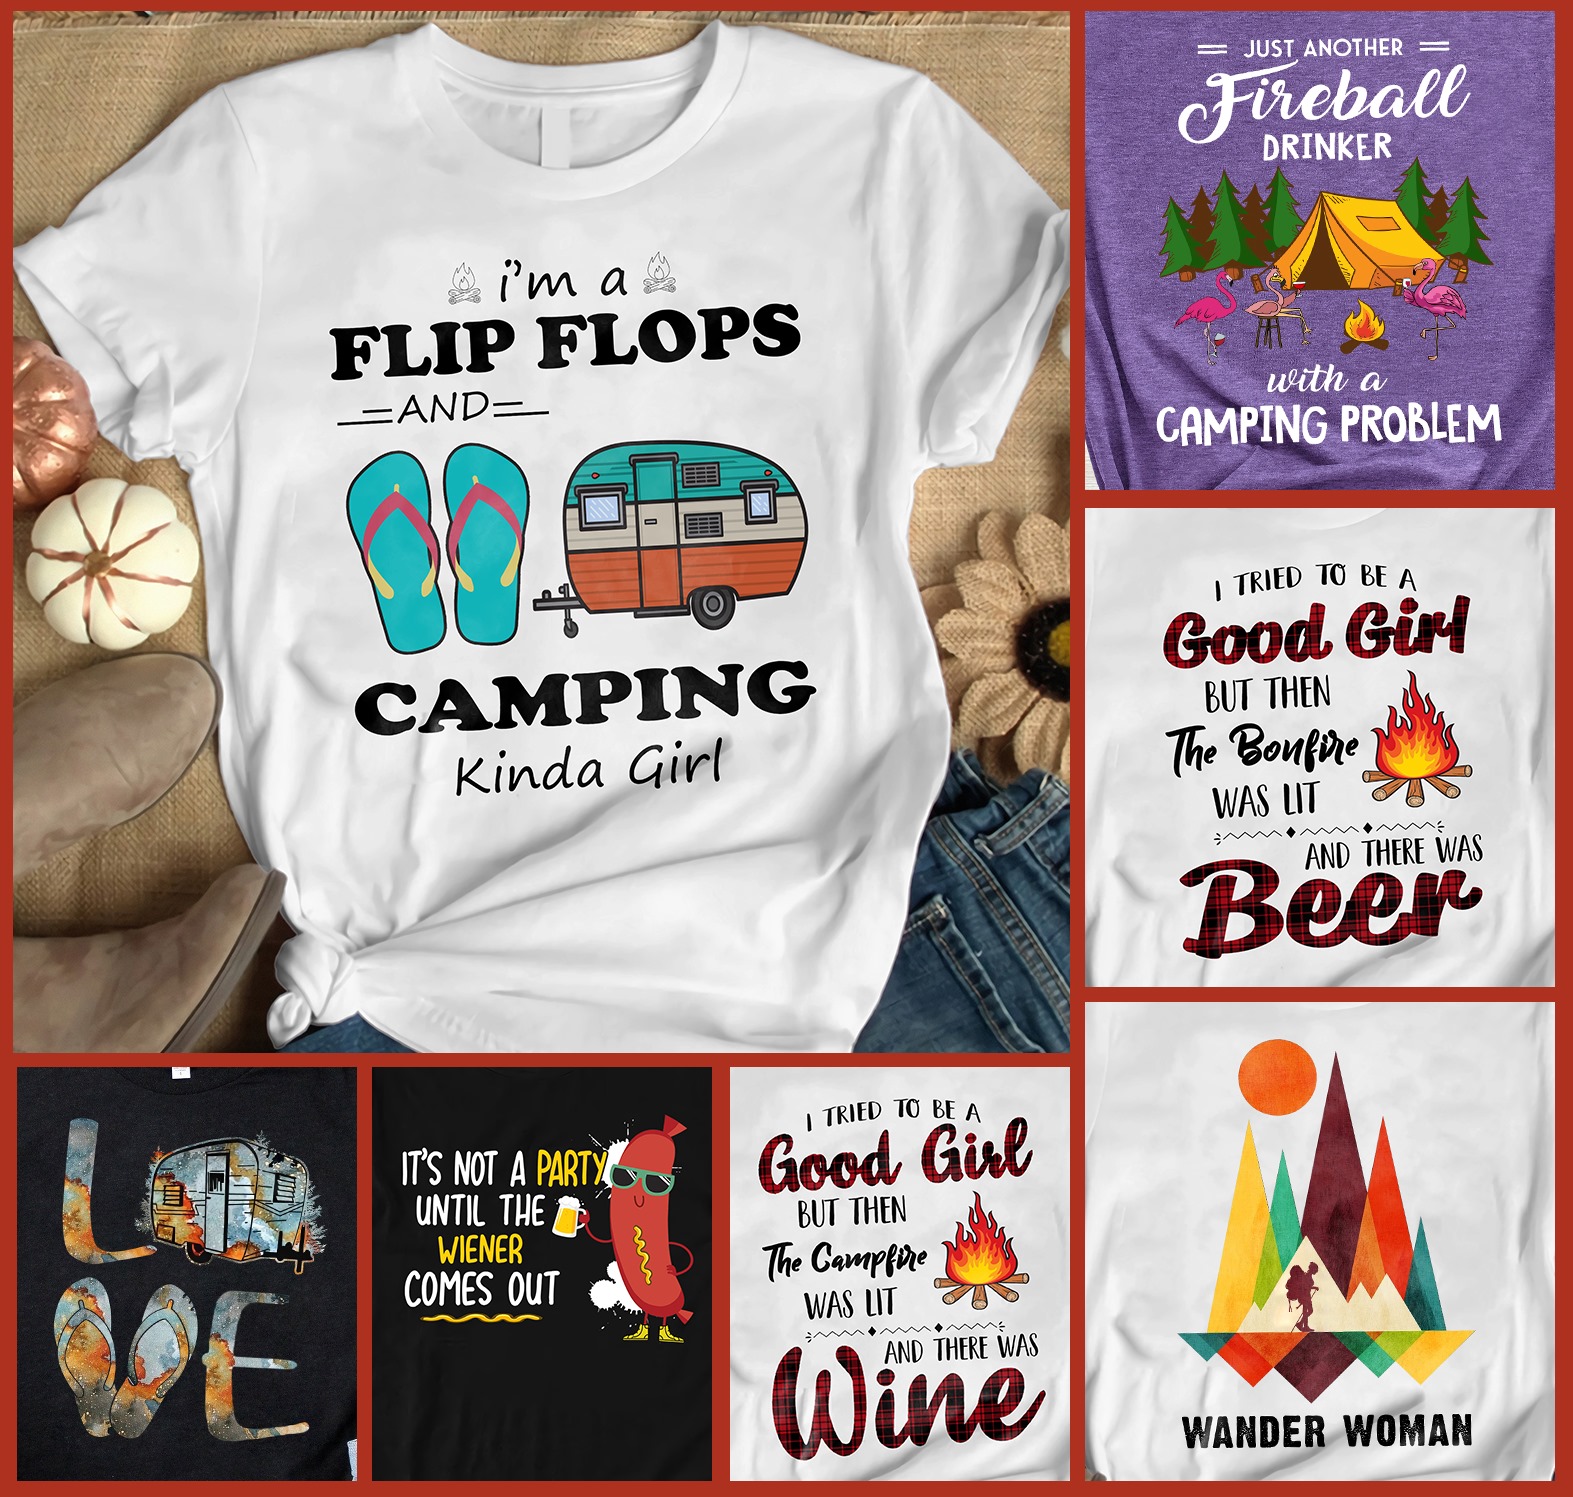 Im a flip flops and camping kinda girl